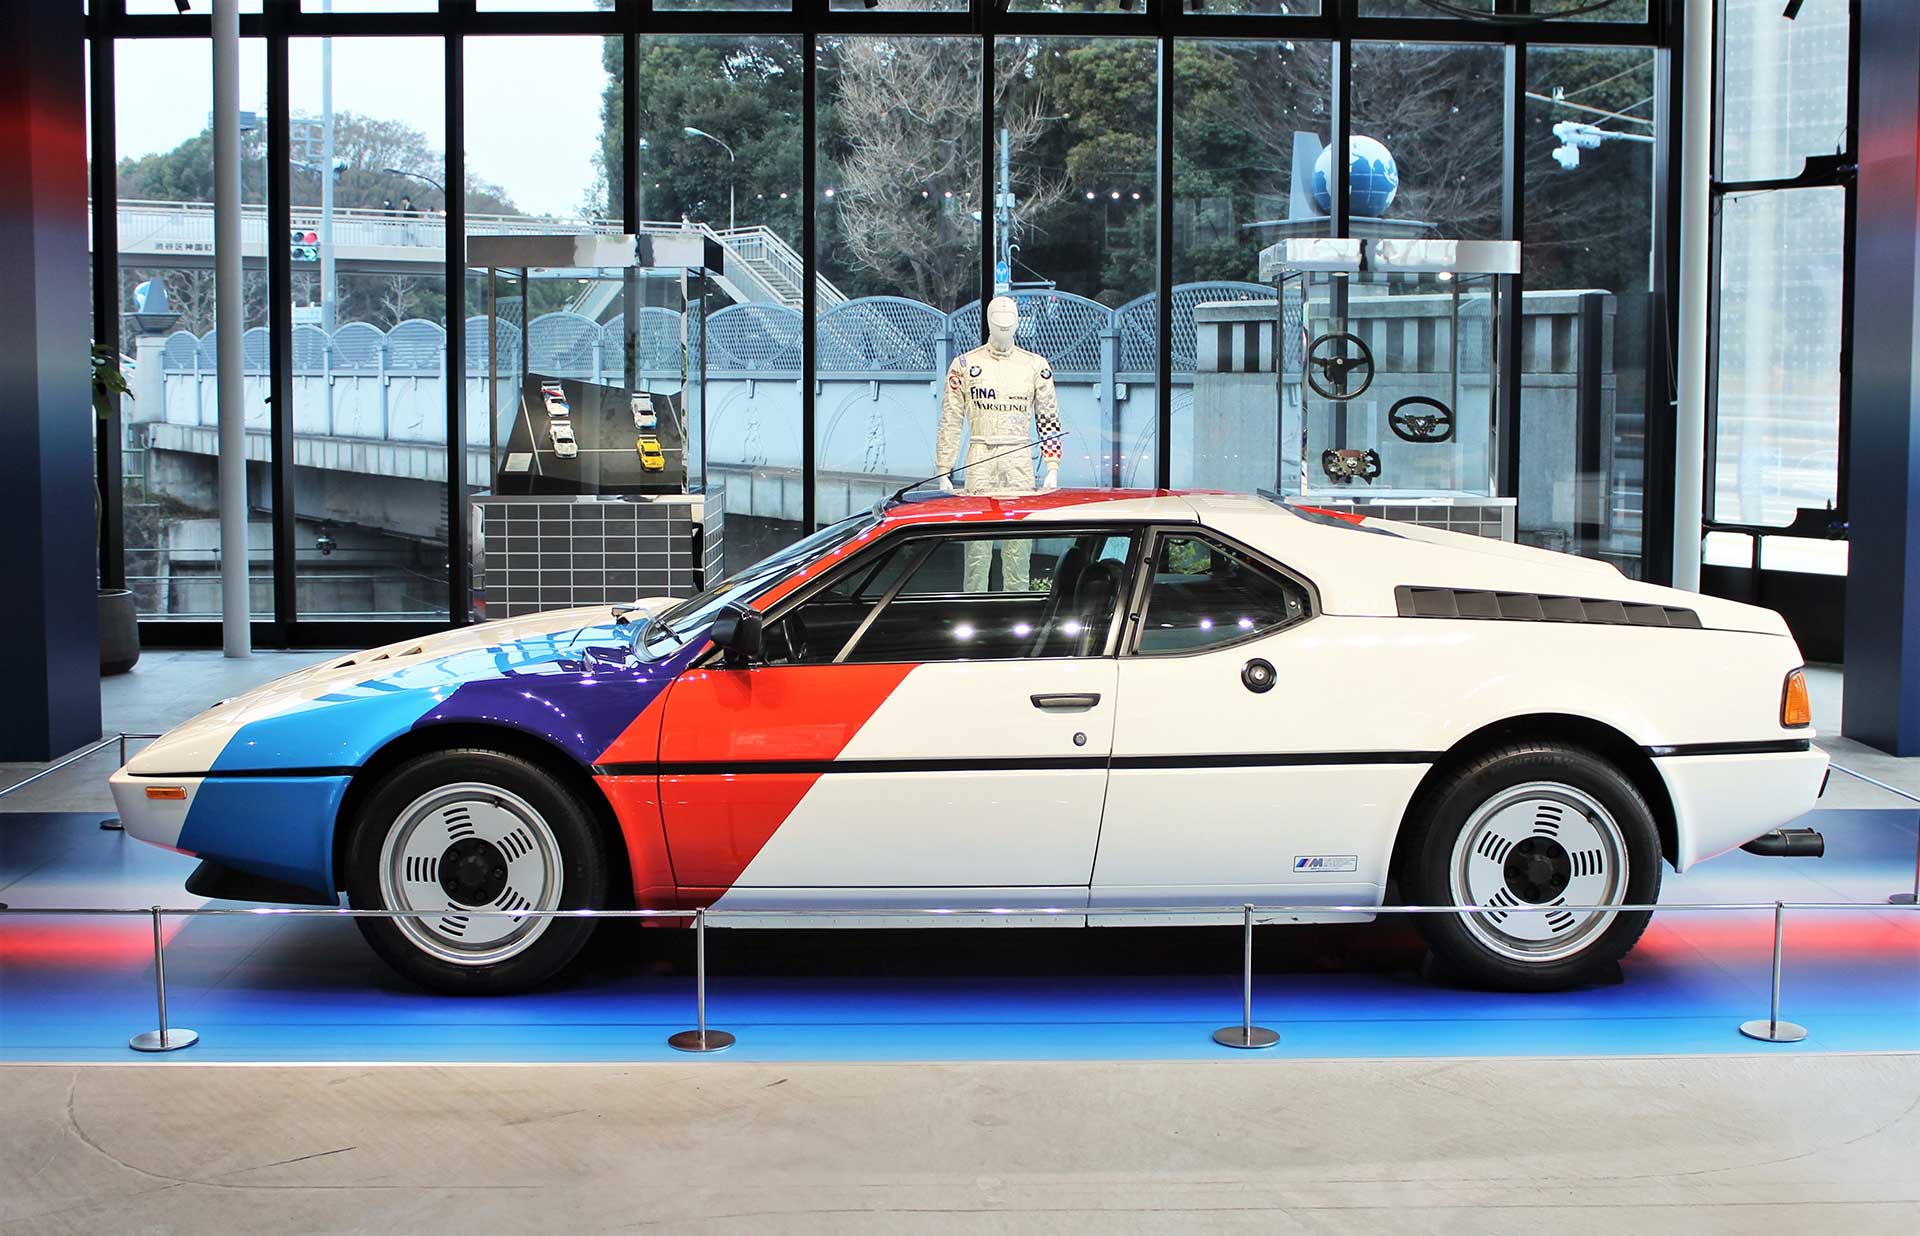 BMW M社のシンボルであるトリコロールが大胆にデザインされている